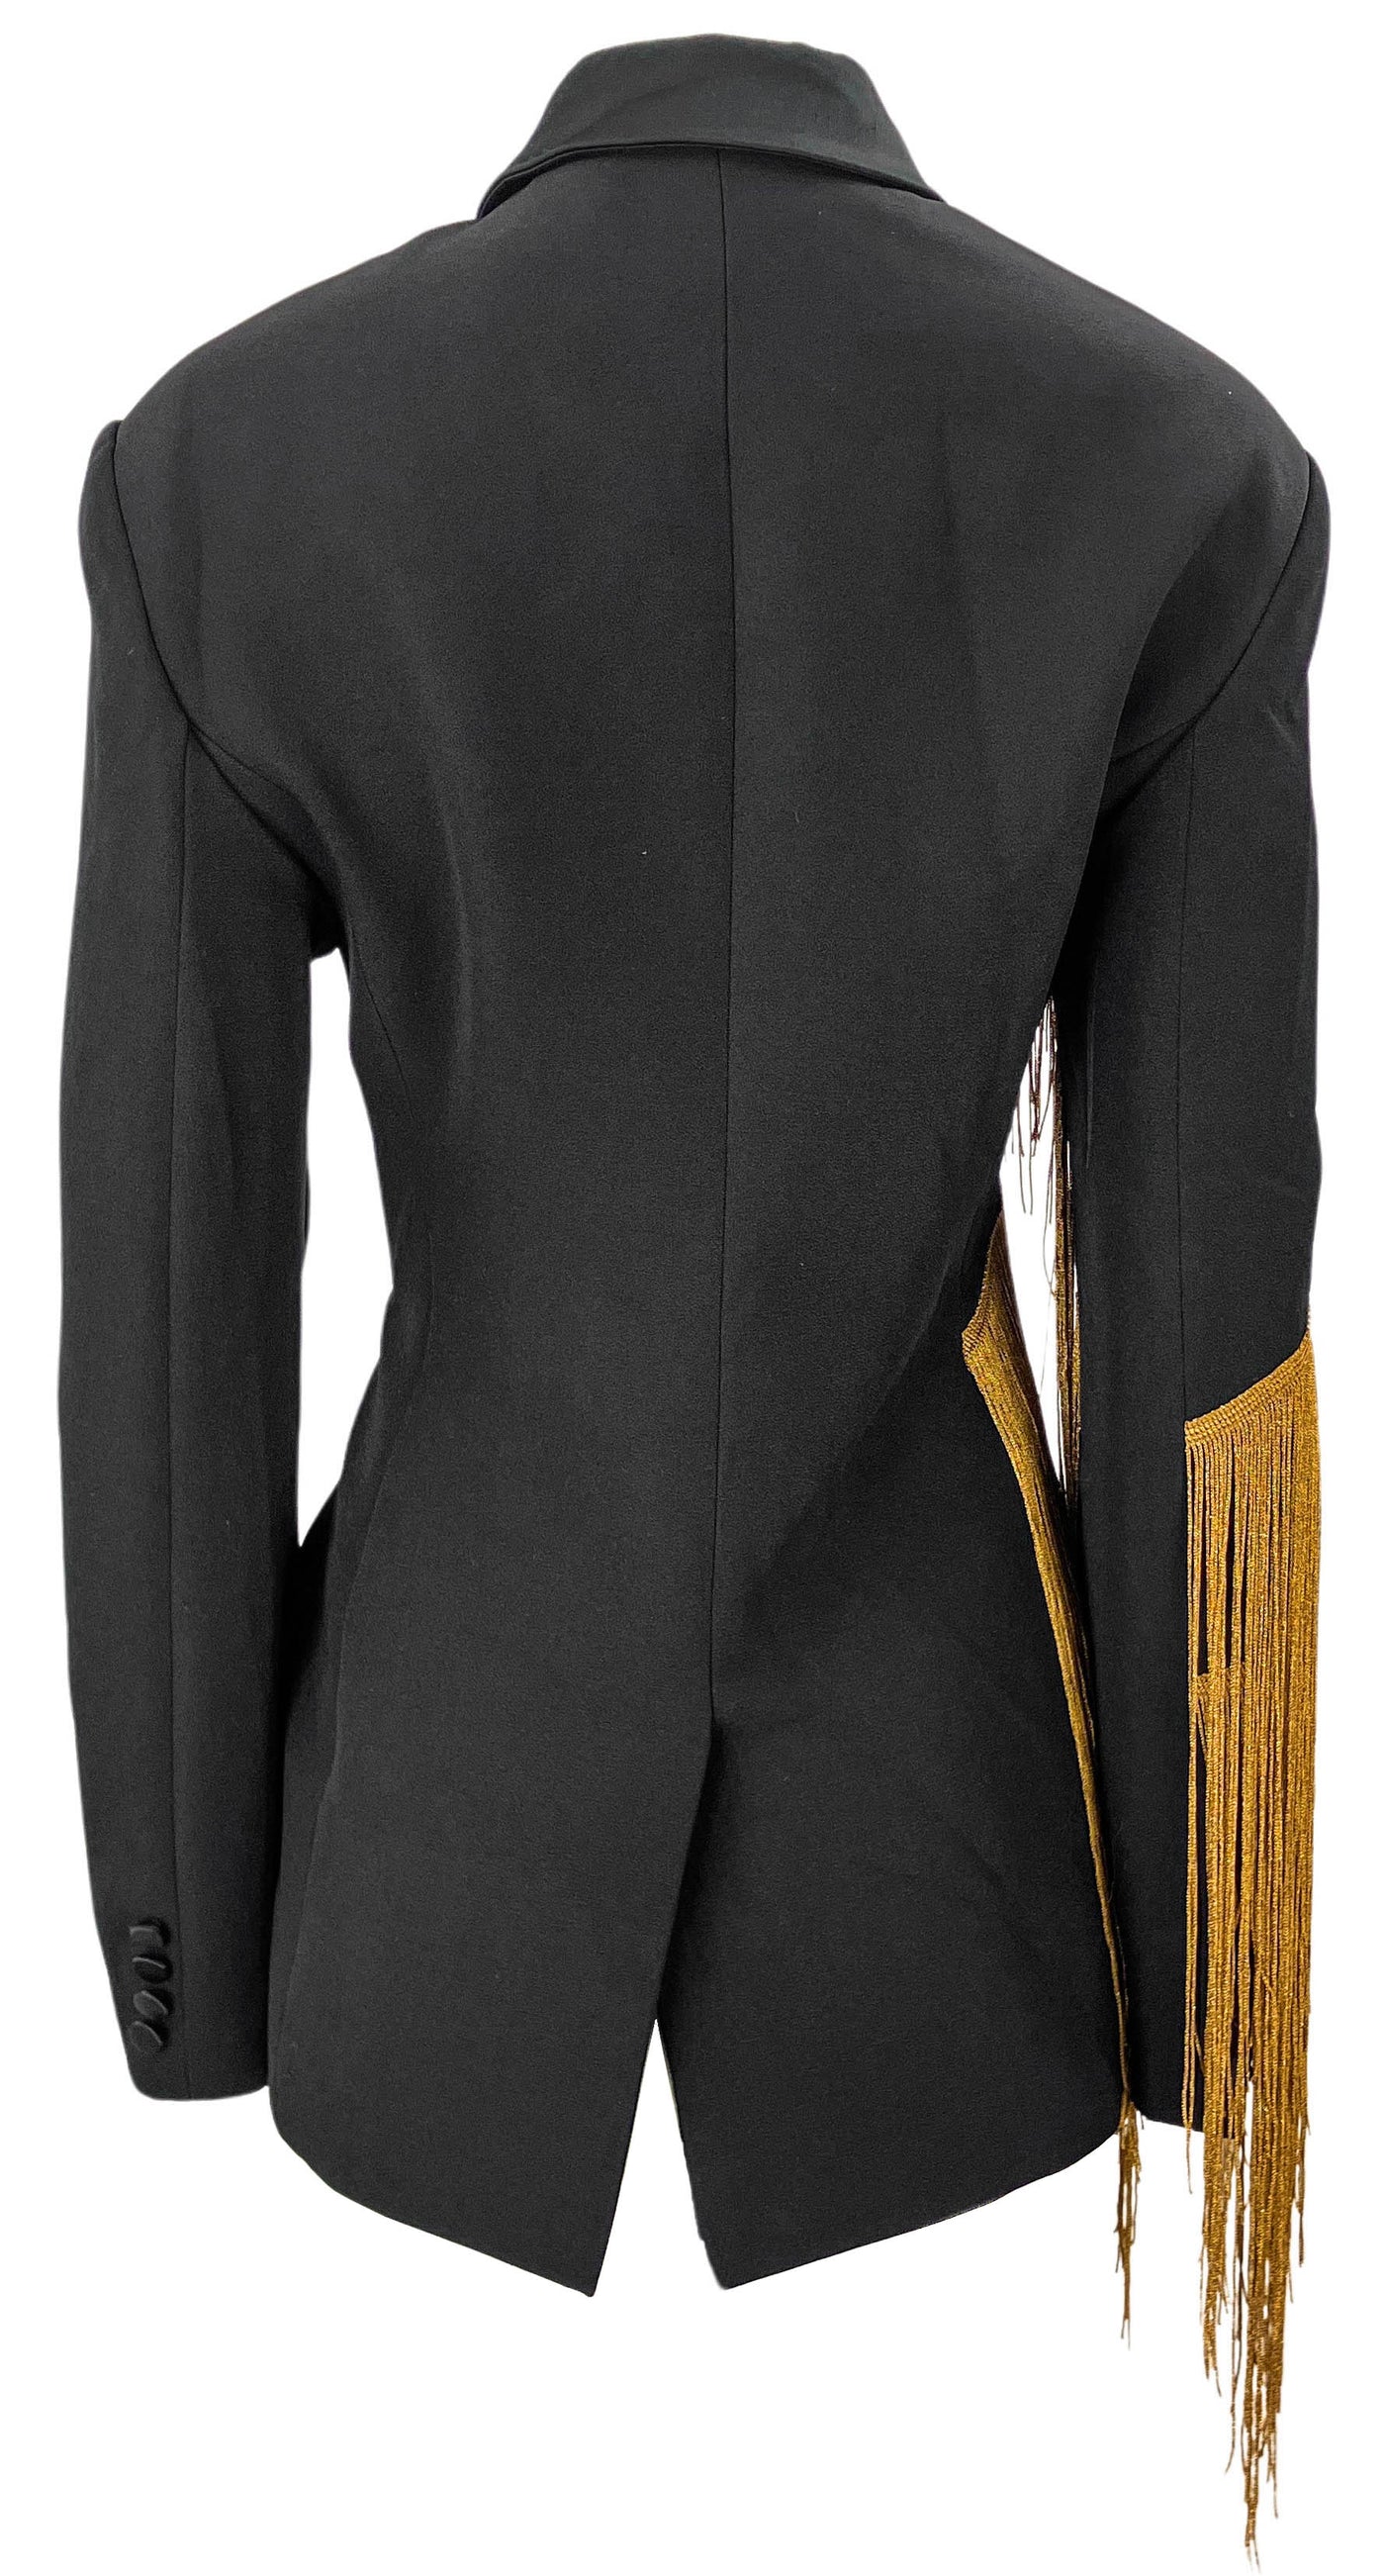 HELLESSY Gaspard Tuxedo Fringe Jacket in Black - Discounts on HELLESSY at UAL